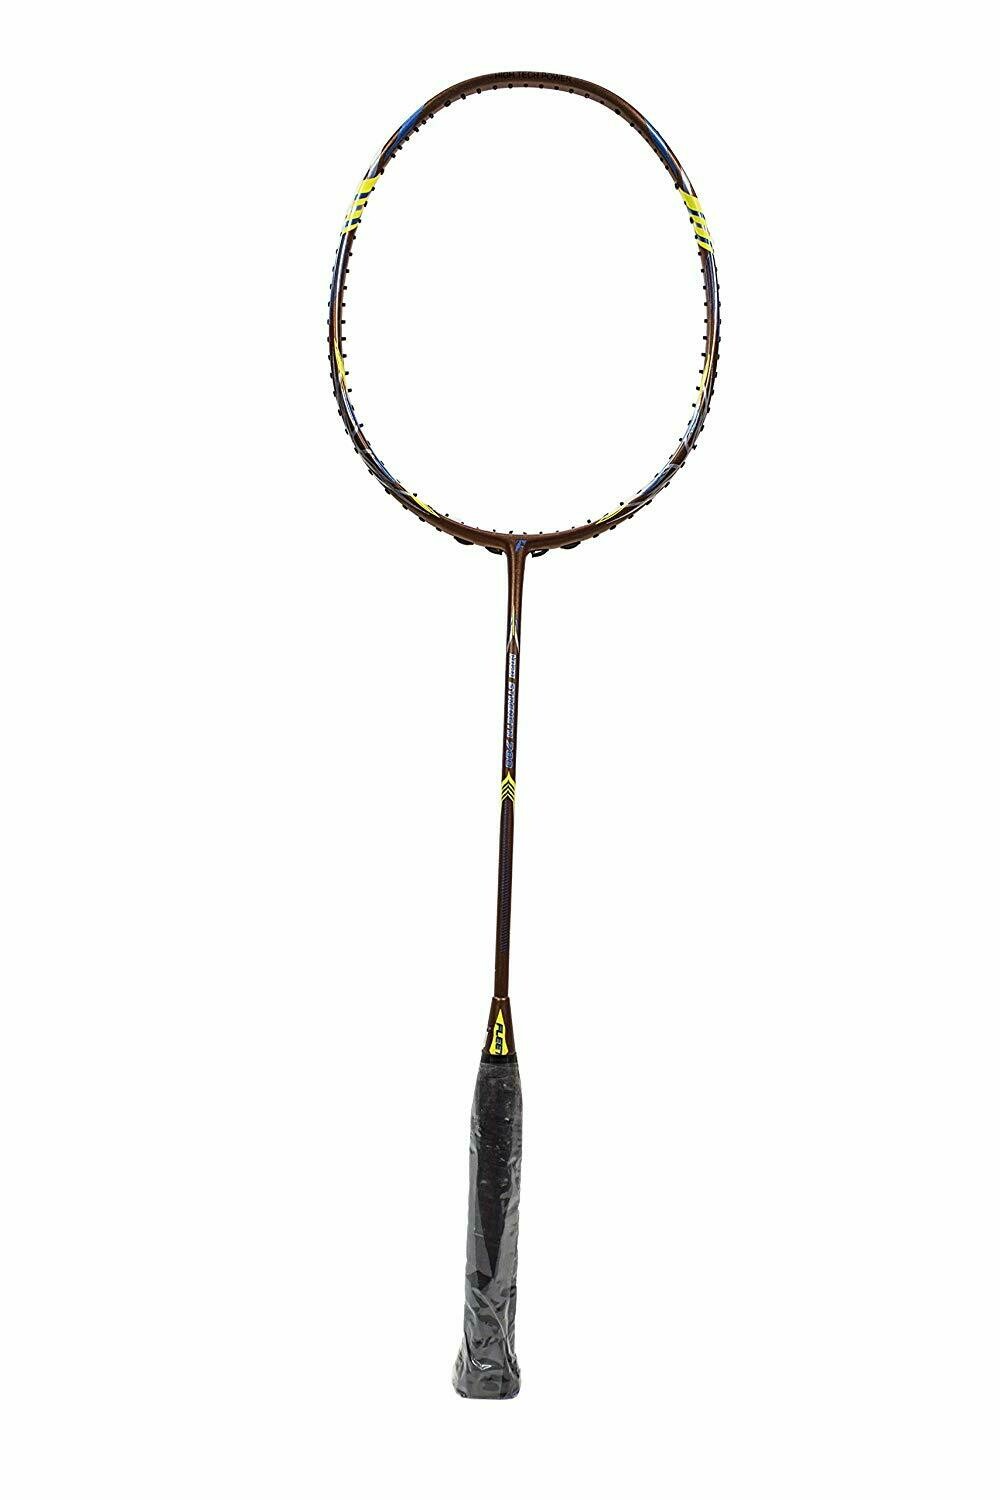 Fleet High Strength 700 Badminton Racket